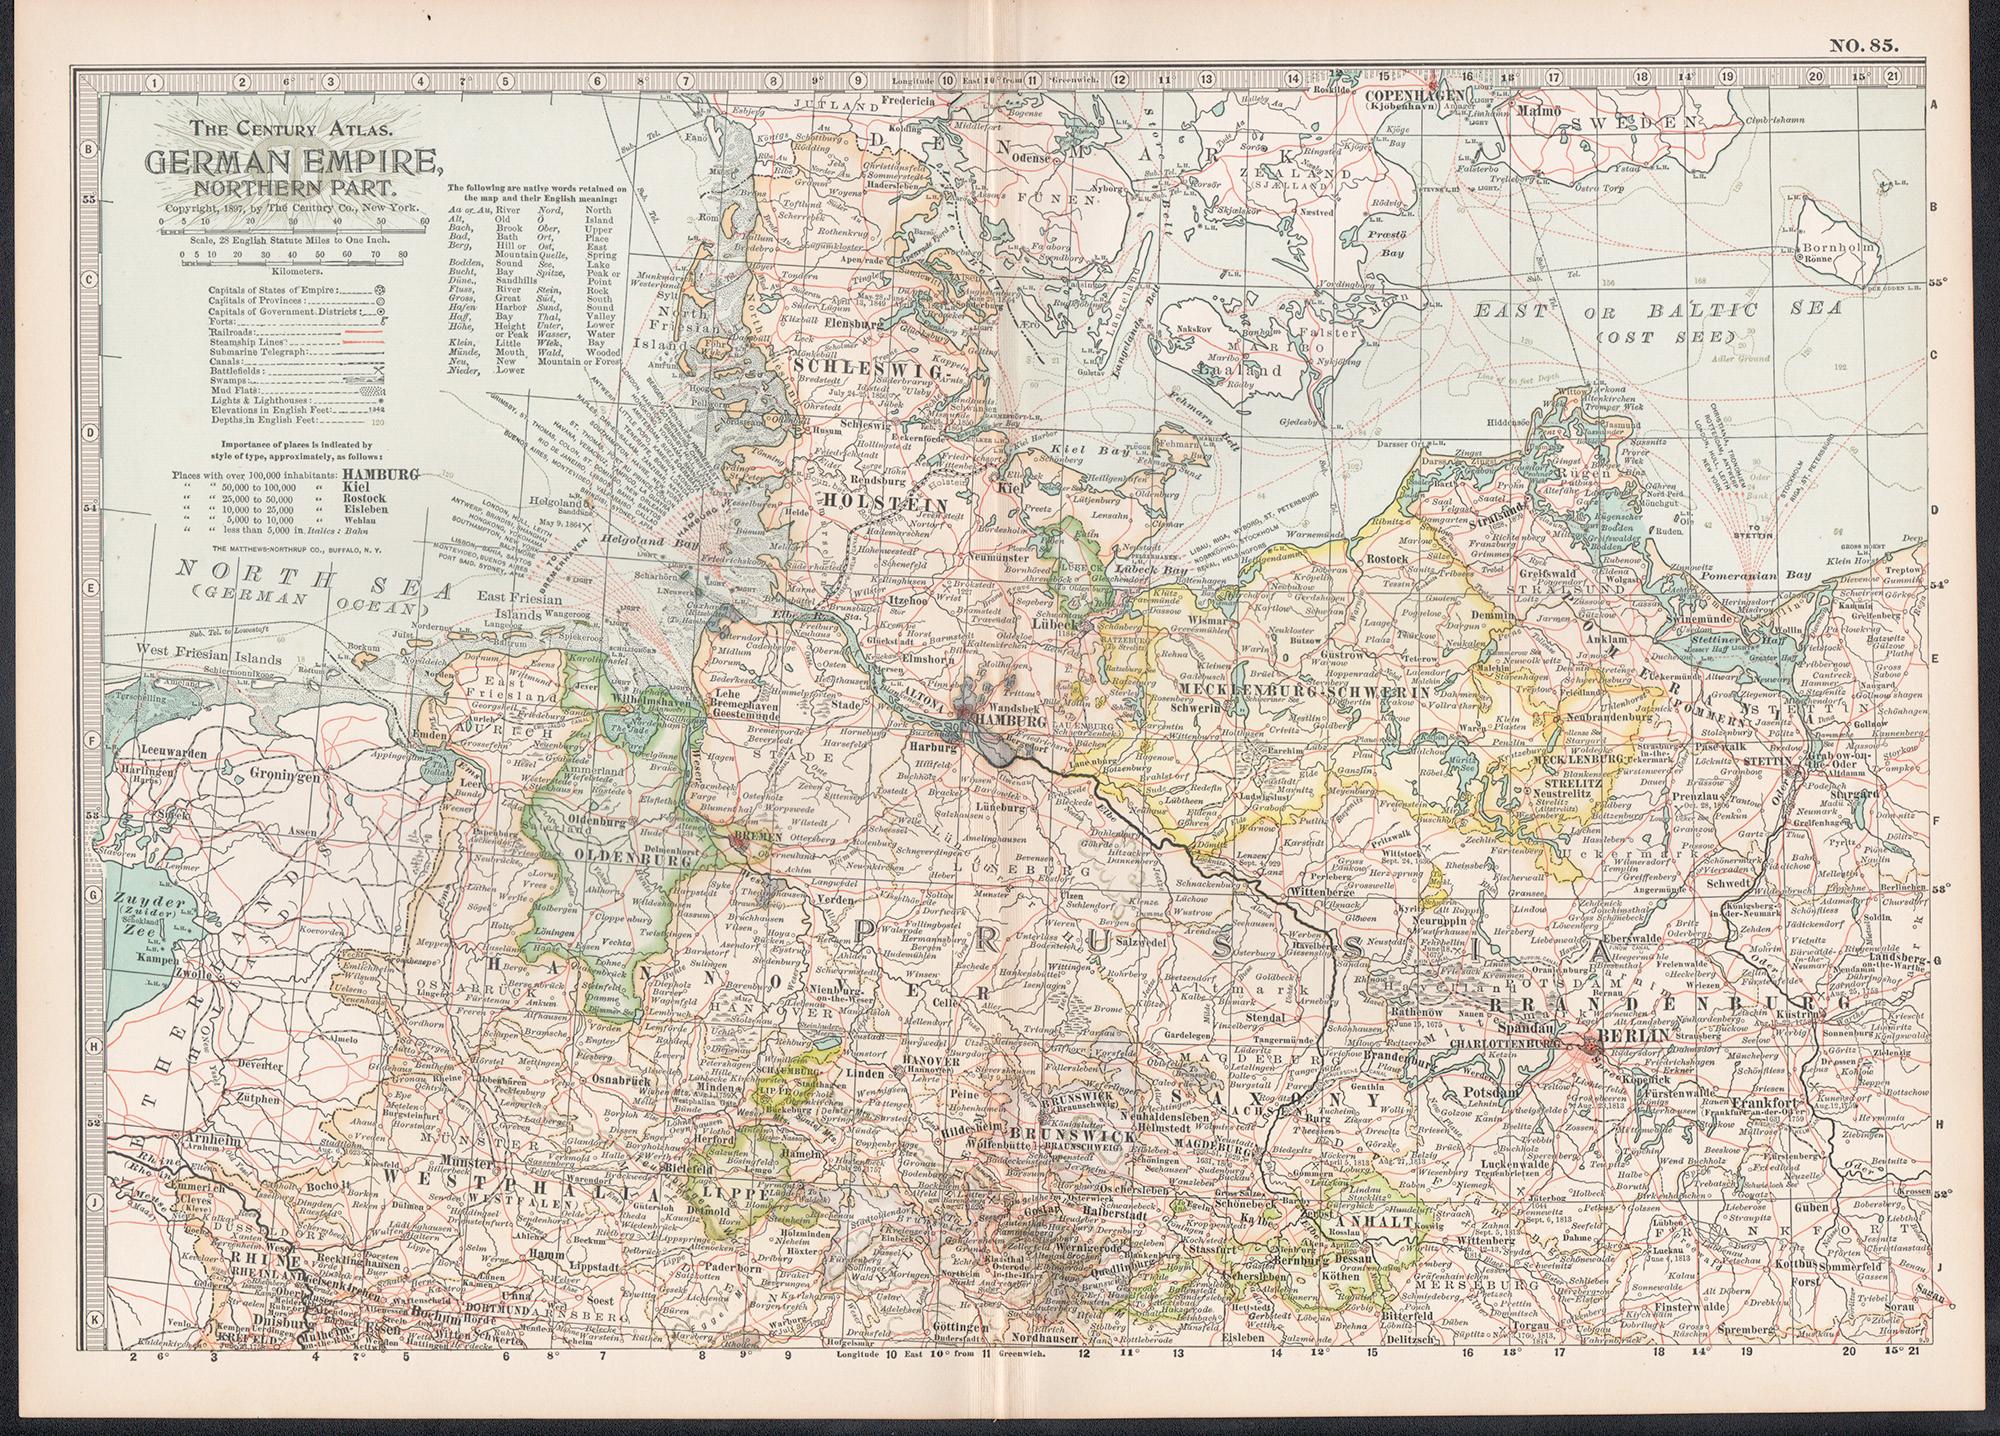 German Empire, Northern Part. Century Atlas antique vintage map - Print by Unknown